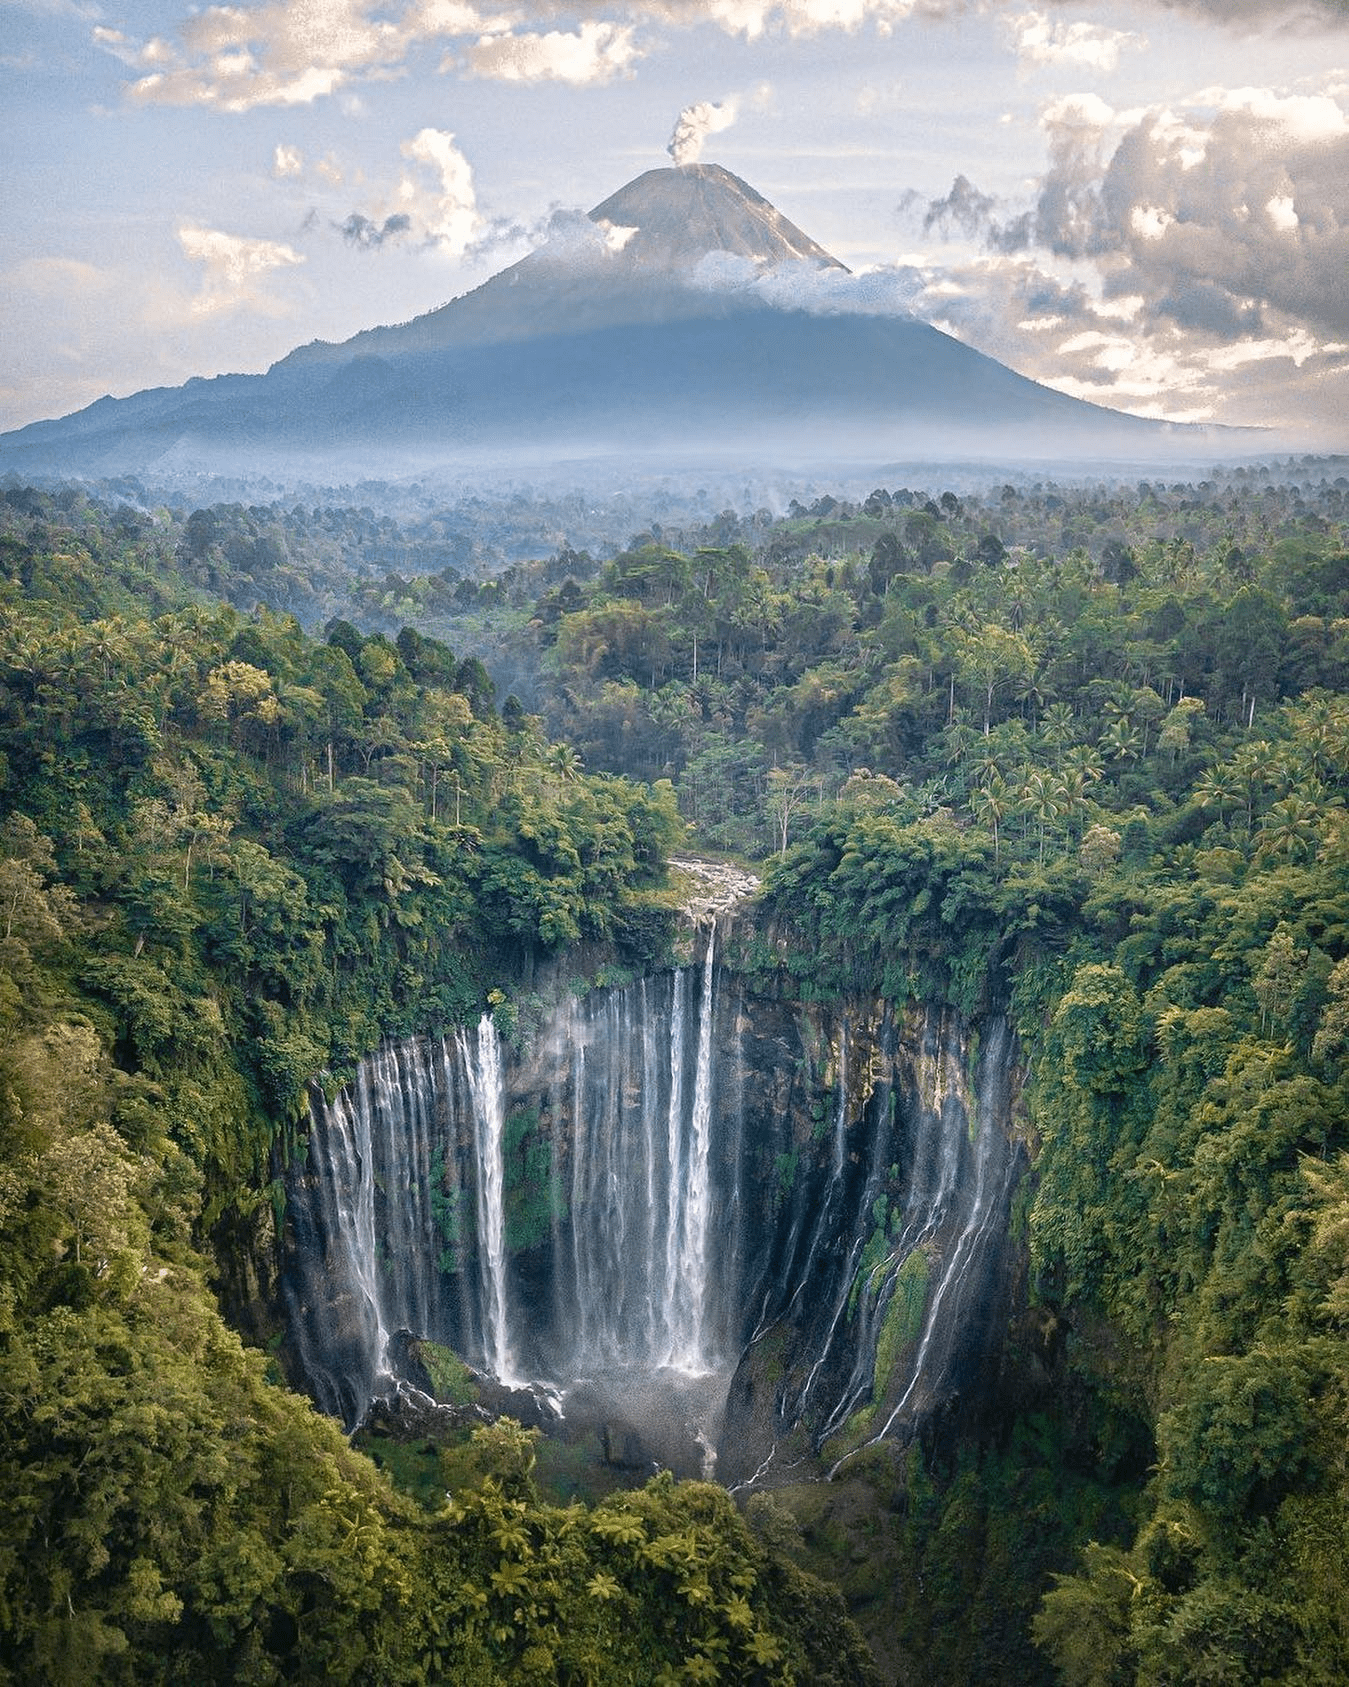 Pronojiwo, Indonesia